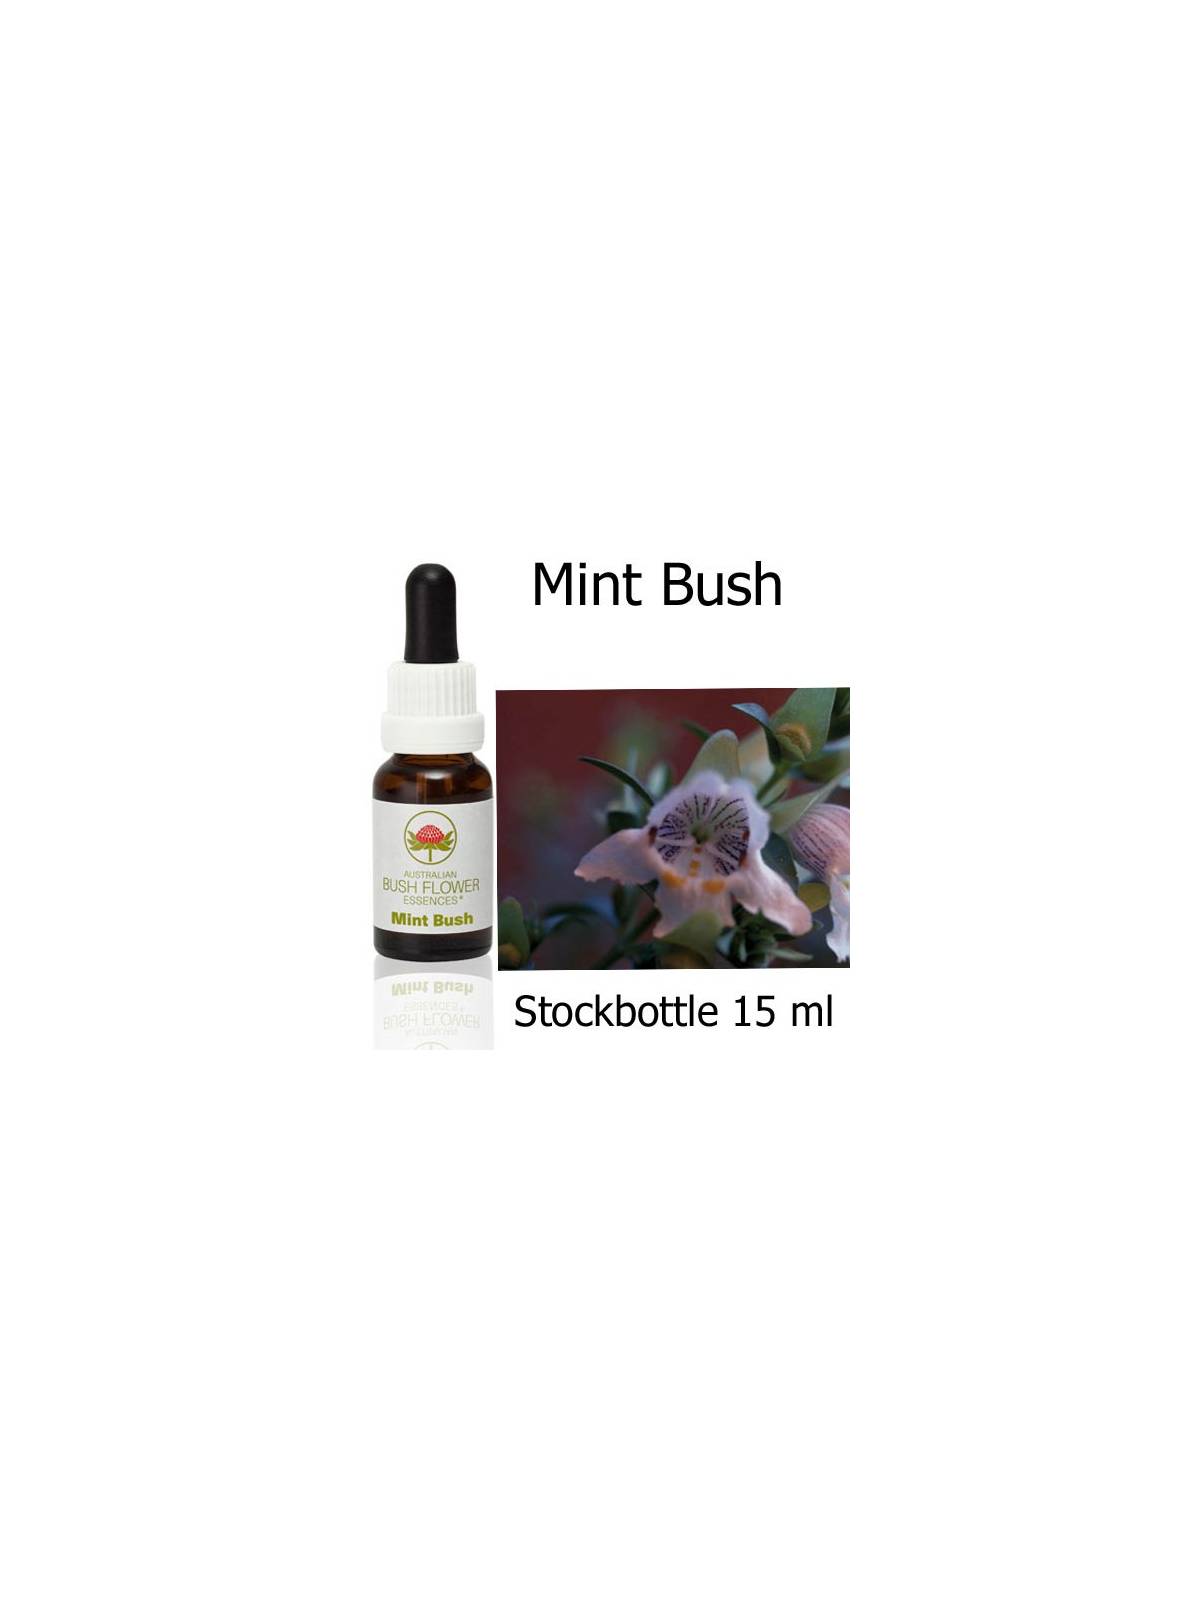 Fiori Australiani Stockbottles Mint Bush Australian Bush Flower Essences